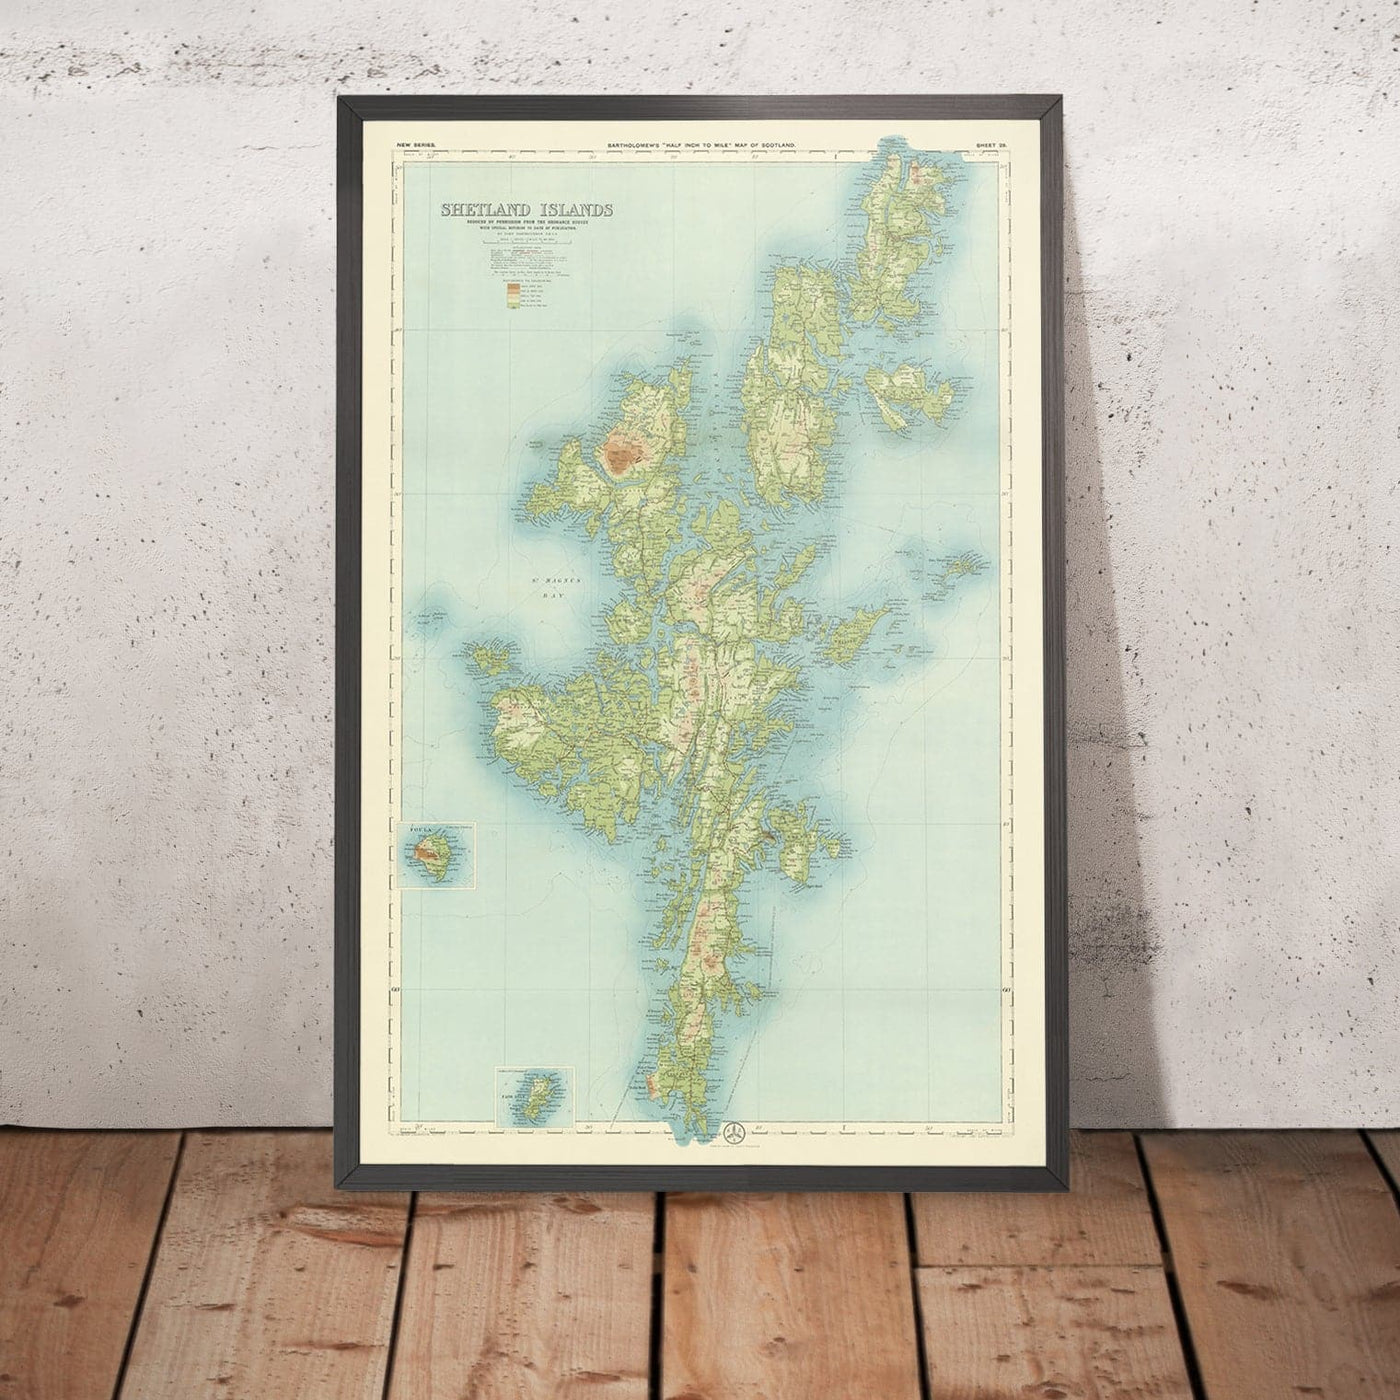 Alte OS-Karte der Shetlandinseln von Bartholomew, 1901: Lerwick, Ronas Hill, Sullom Voe, Jarlshof, Fair Isle, Foula